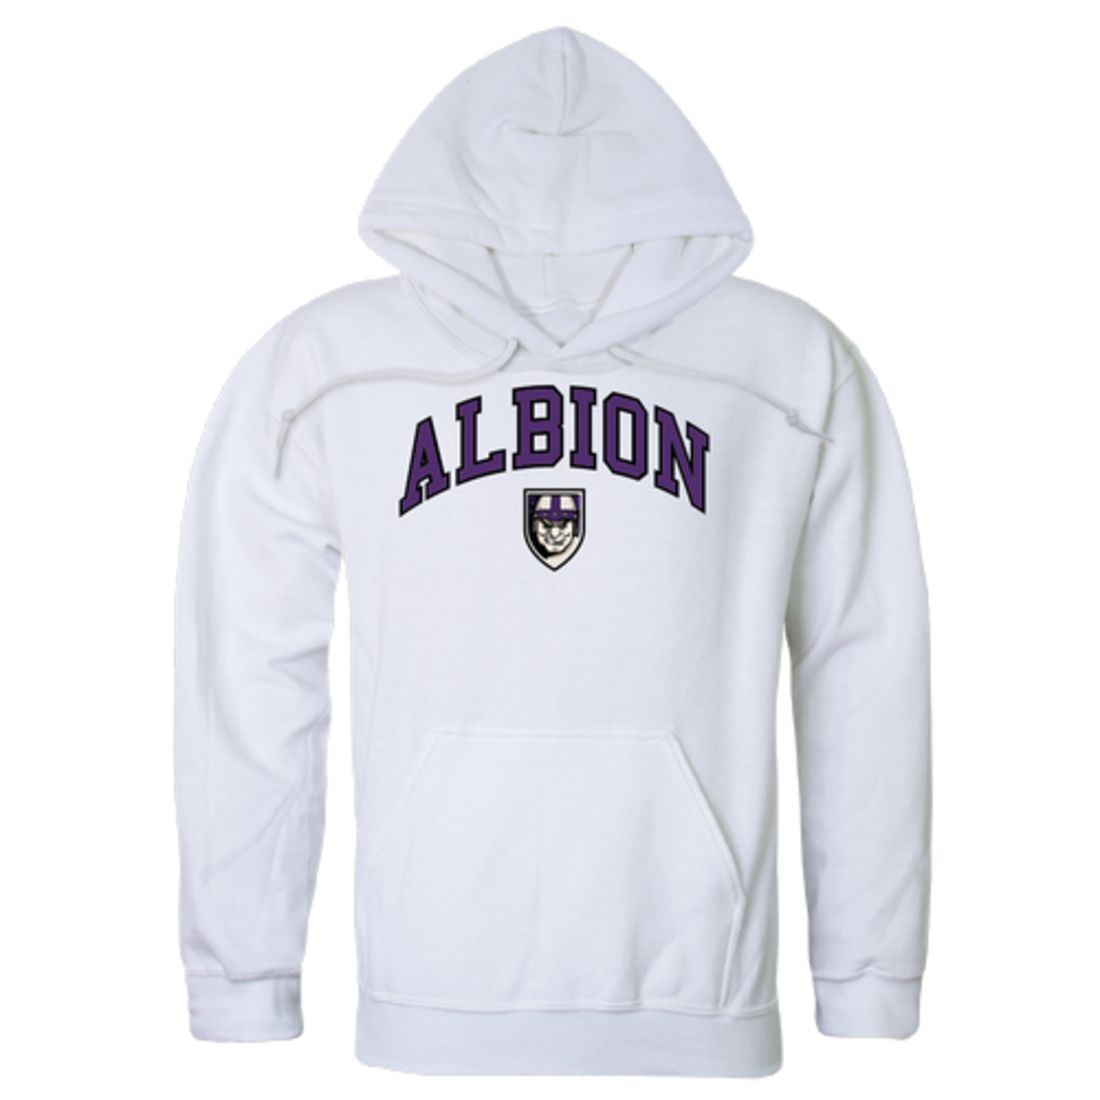 Albion-College-Britons-Campus-Fleece-Hoodie-Sweatshirts